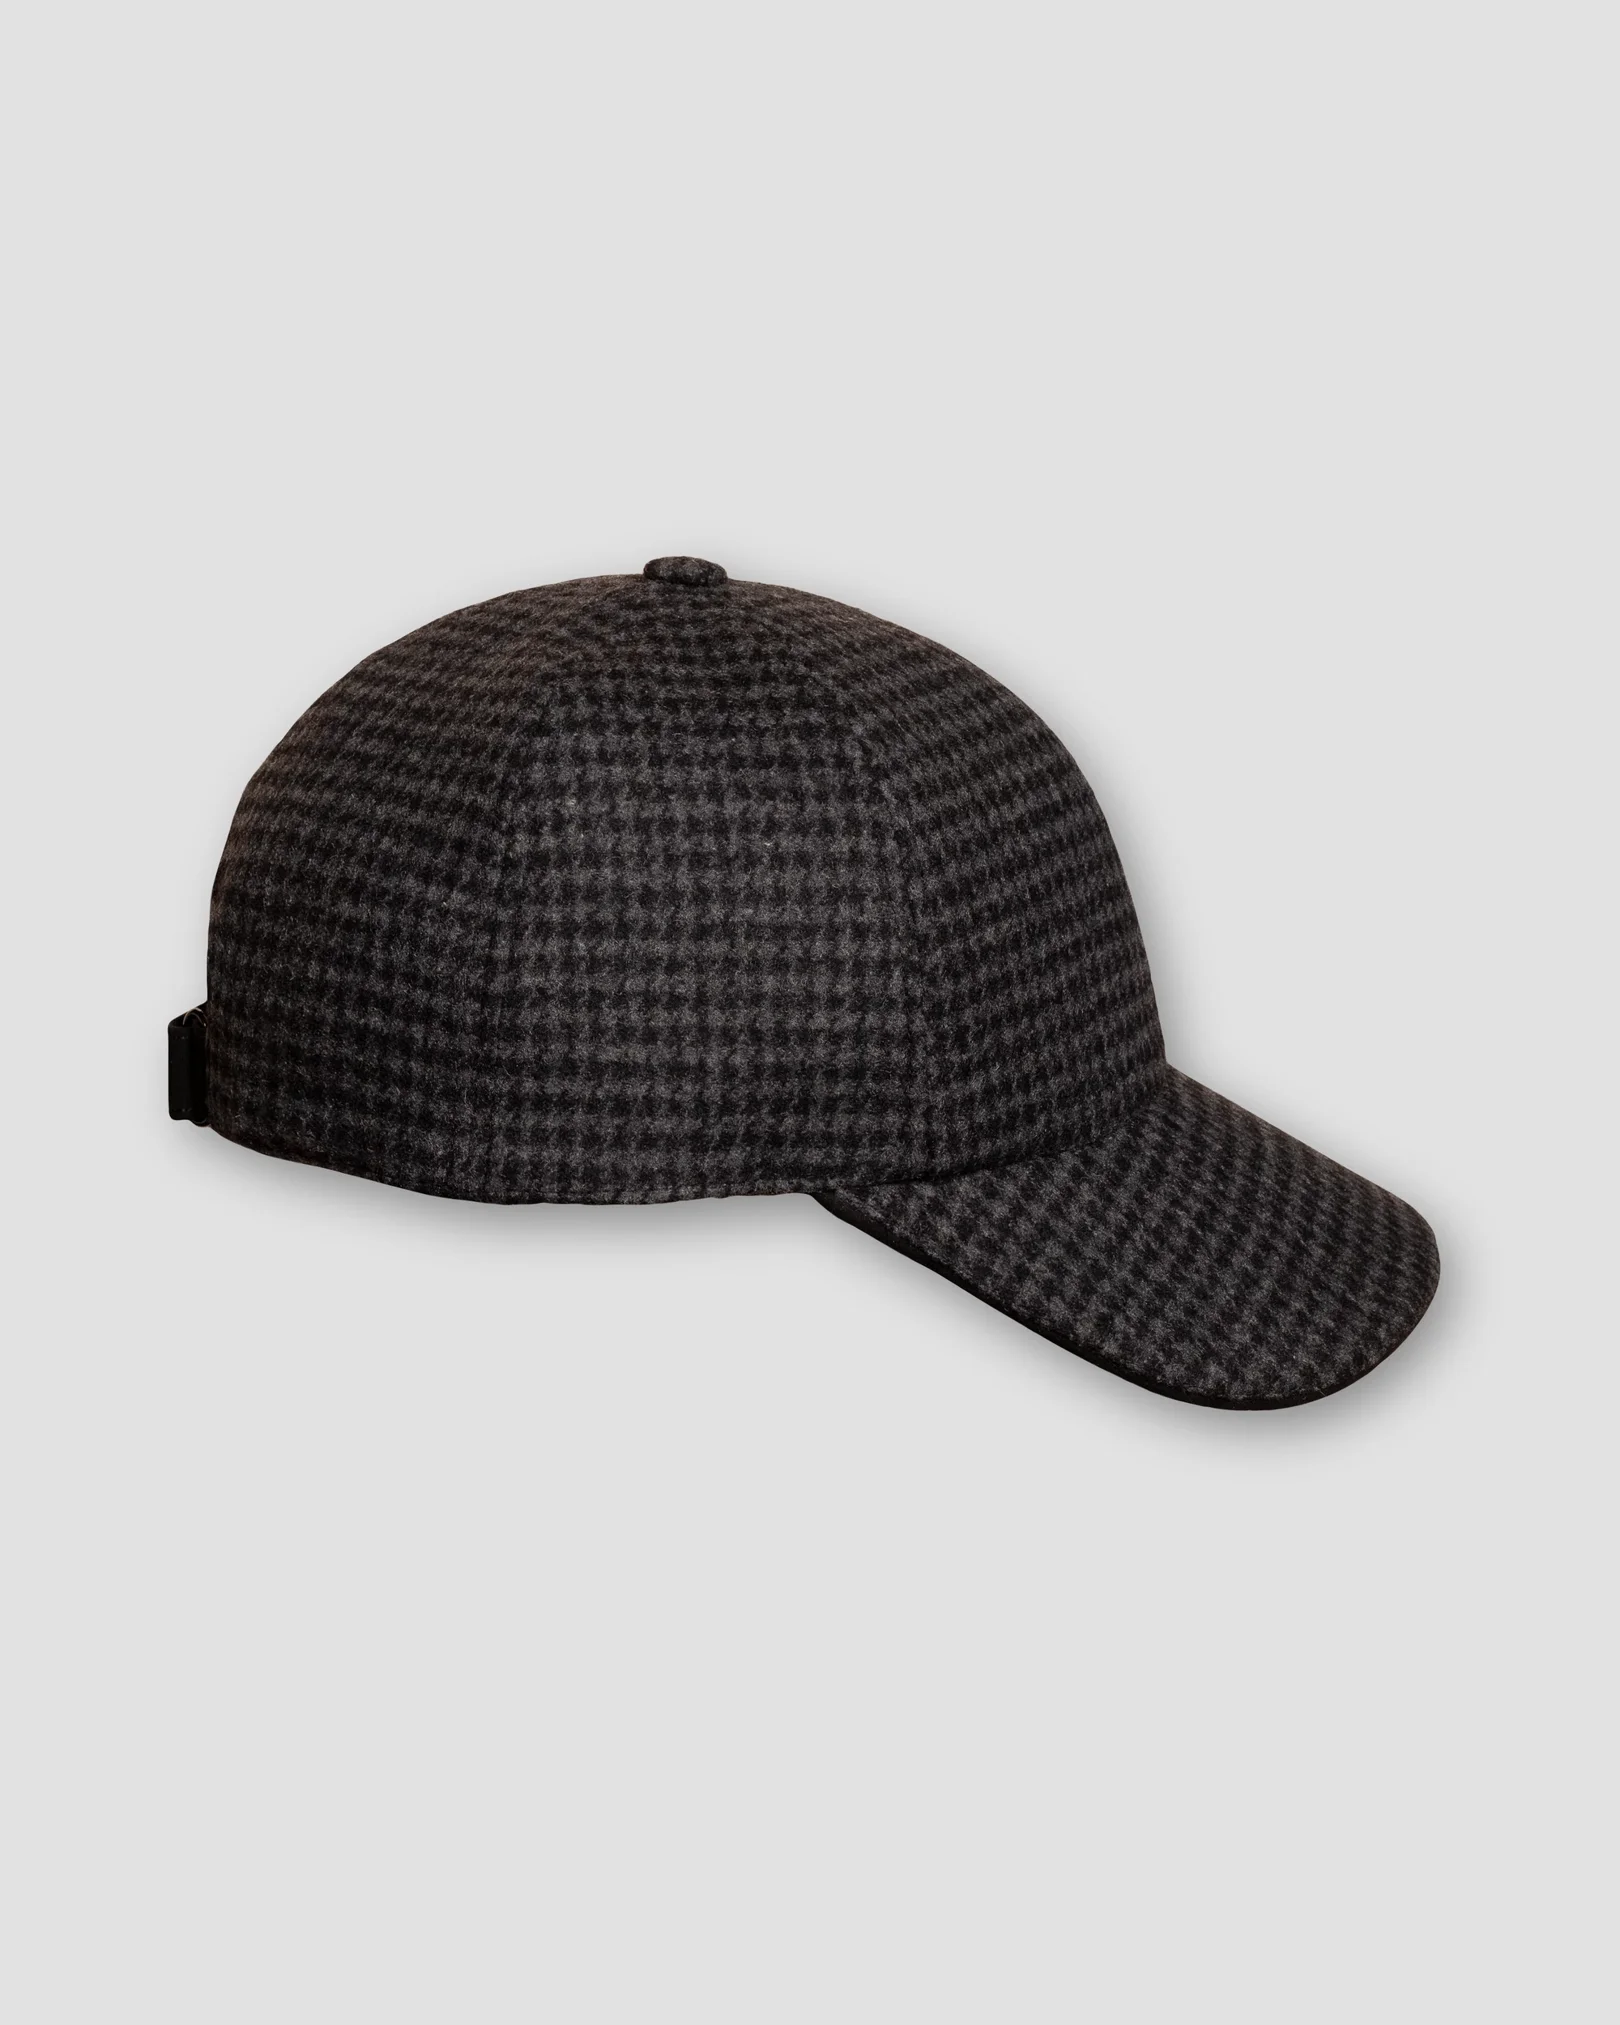 Eton - black houndstooth cap